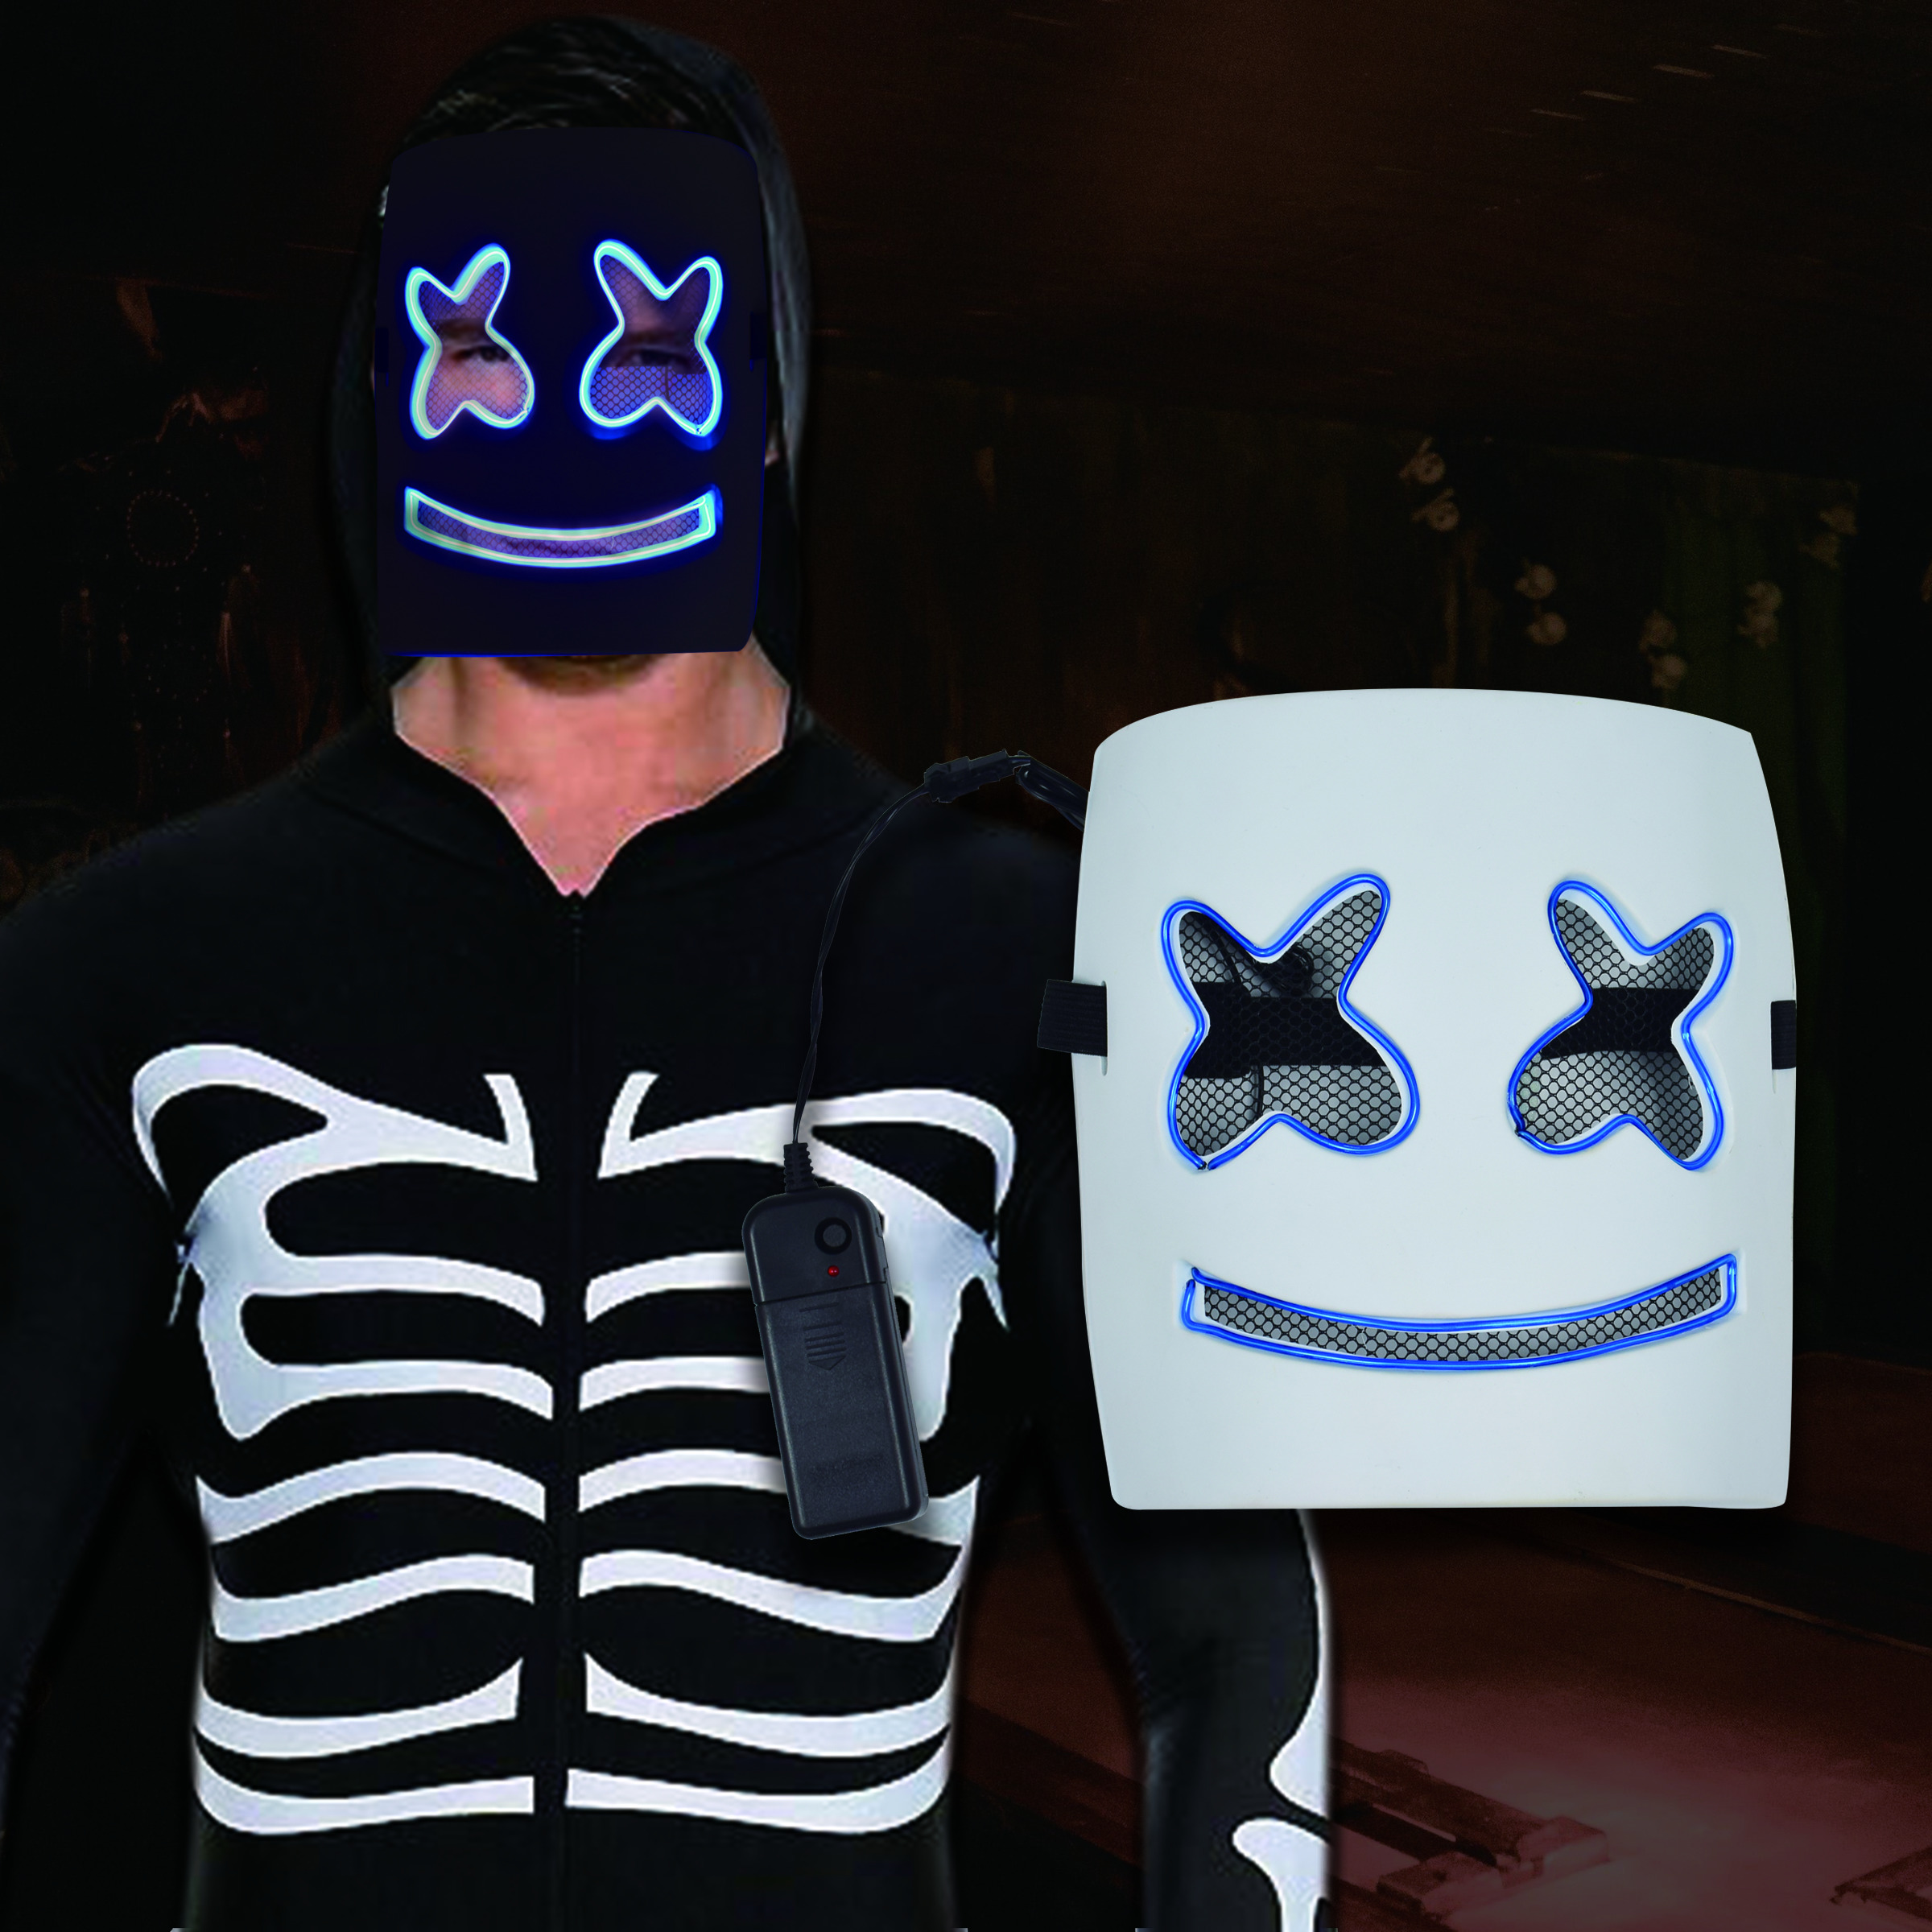 DJ Mask Music Festival Helmets Halloween Party Props Costume LED Light Up Marshmallow Masks